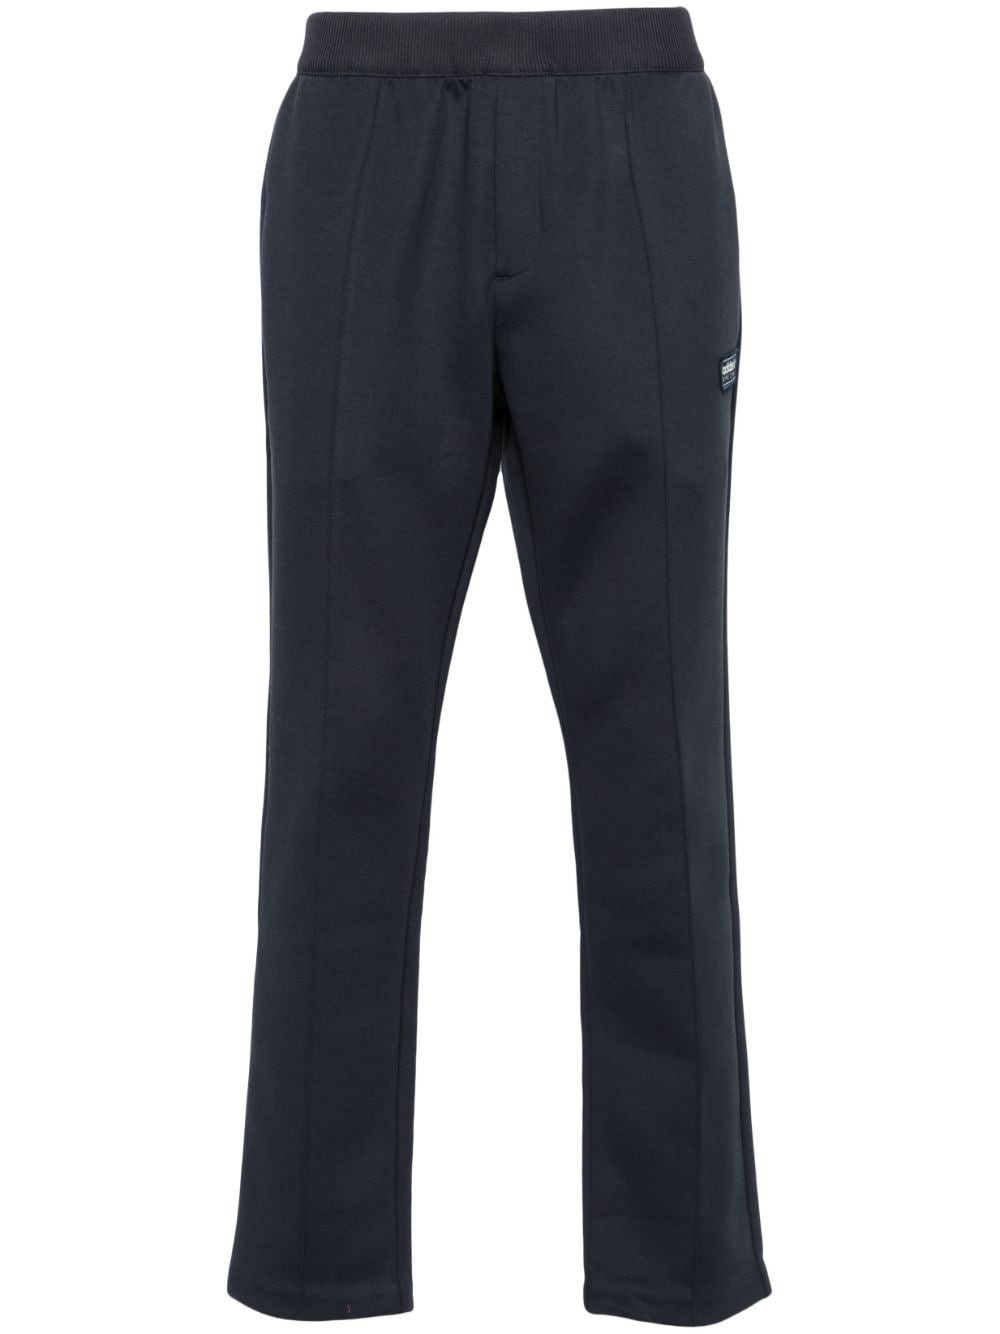 Adidas Originals Anglezarke Tp Track Pants In Blue